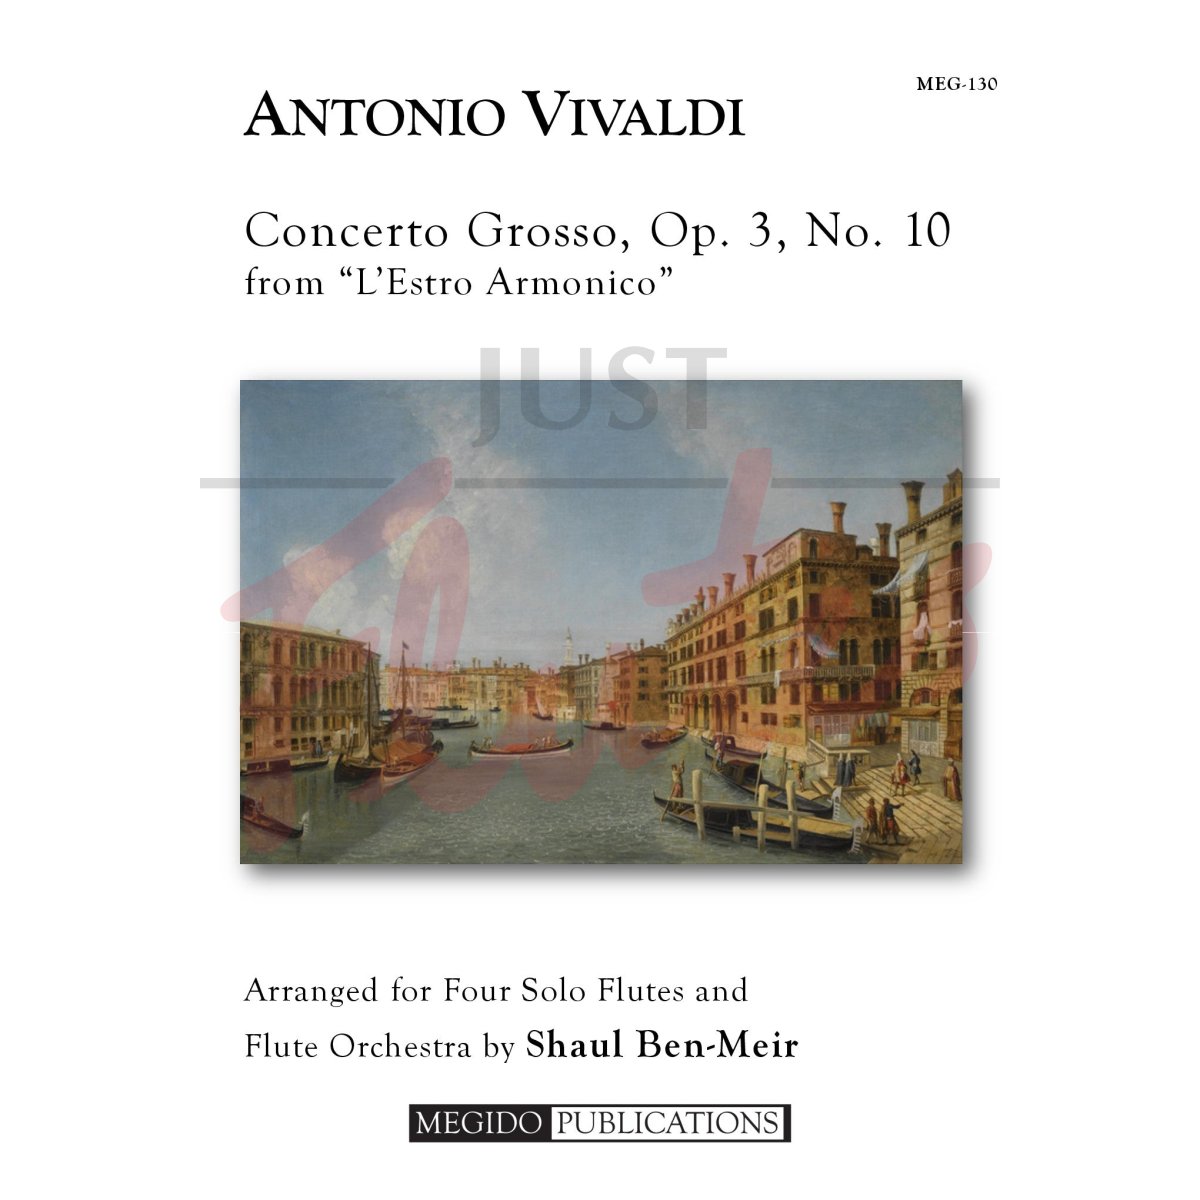 Concerto Grosso for Flute Orchestra